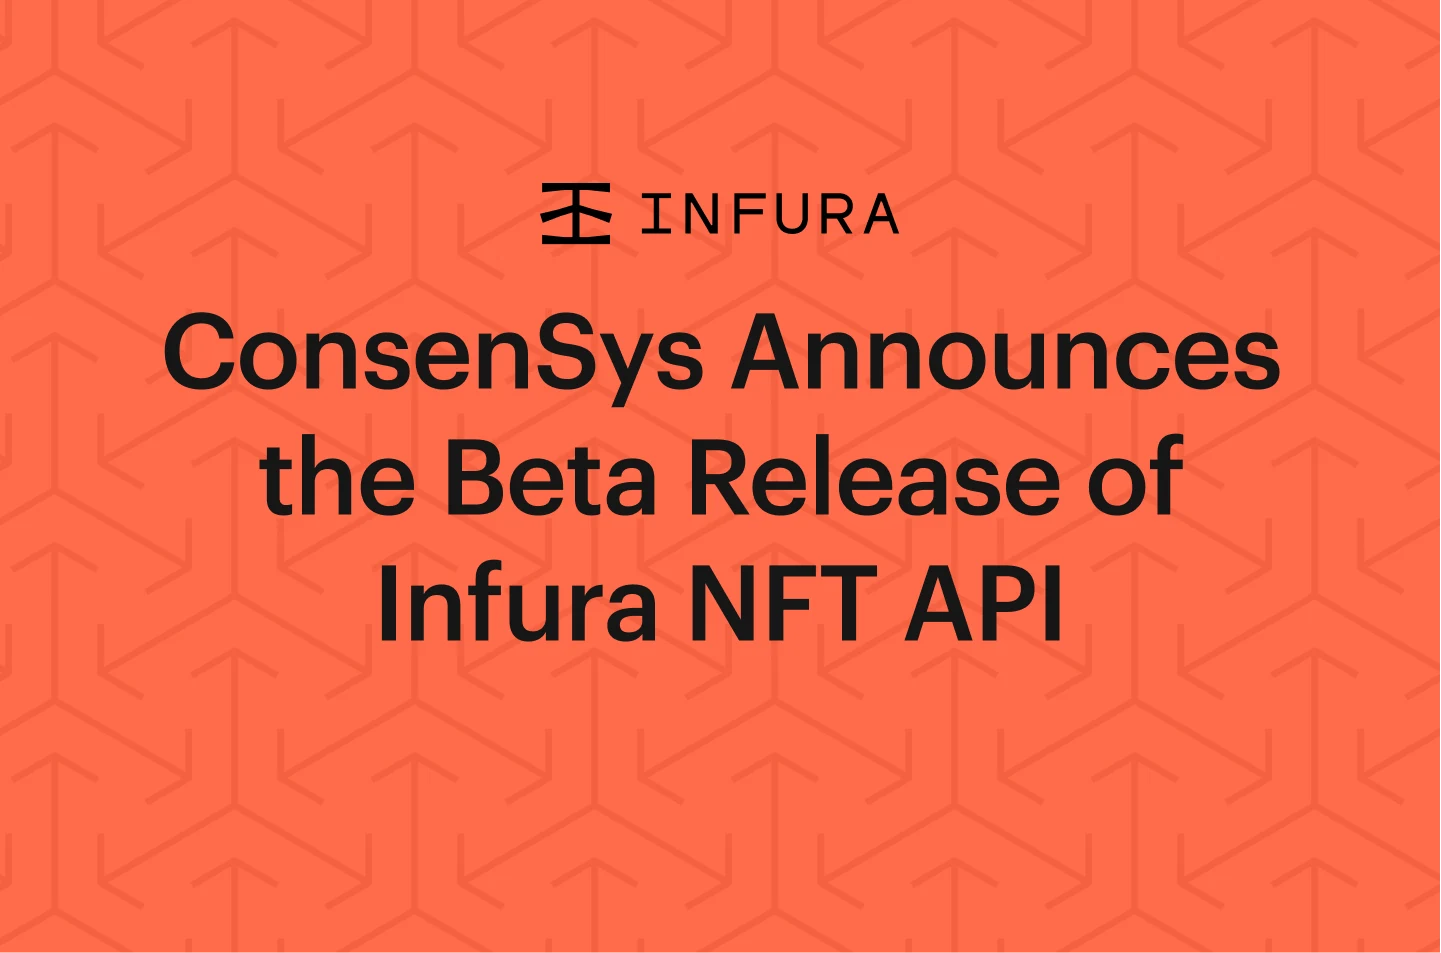 Image: ConsenSys Announces the Beta Release of Infura NFT API 